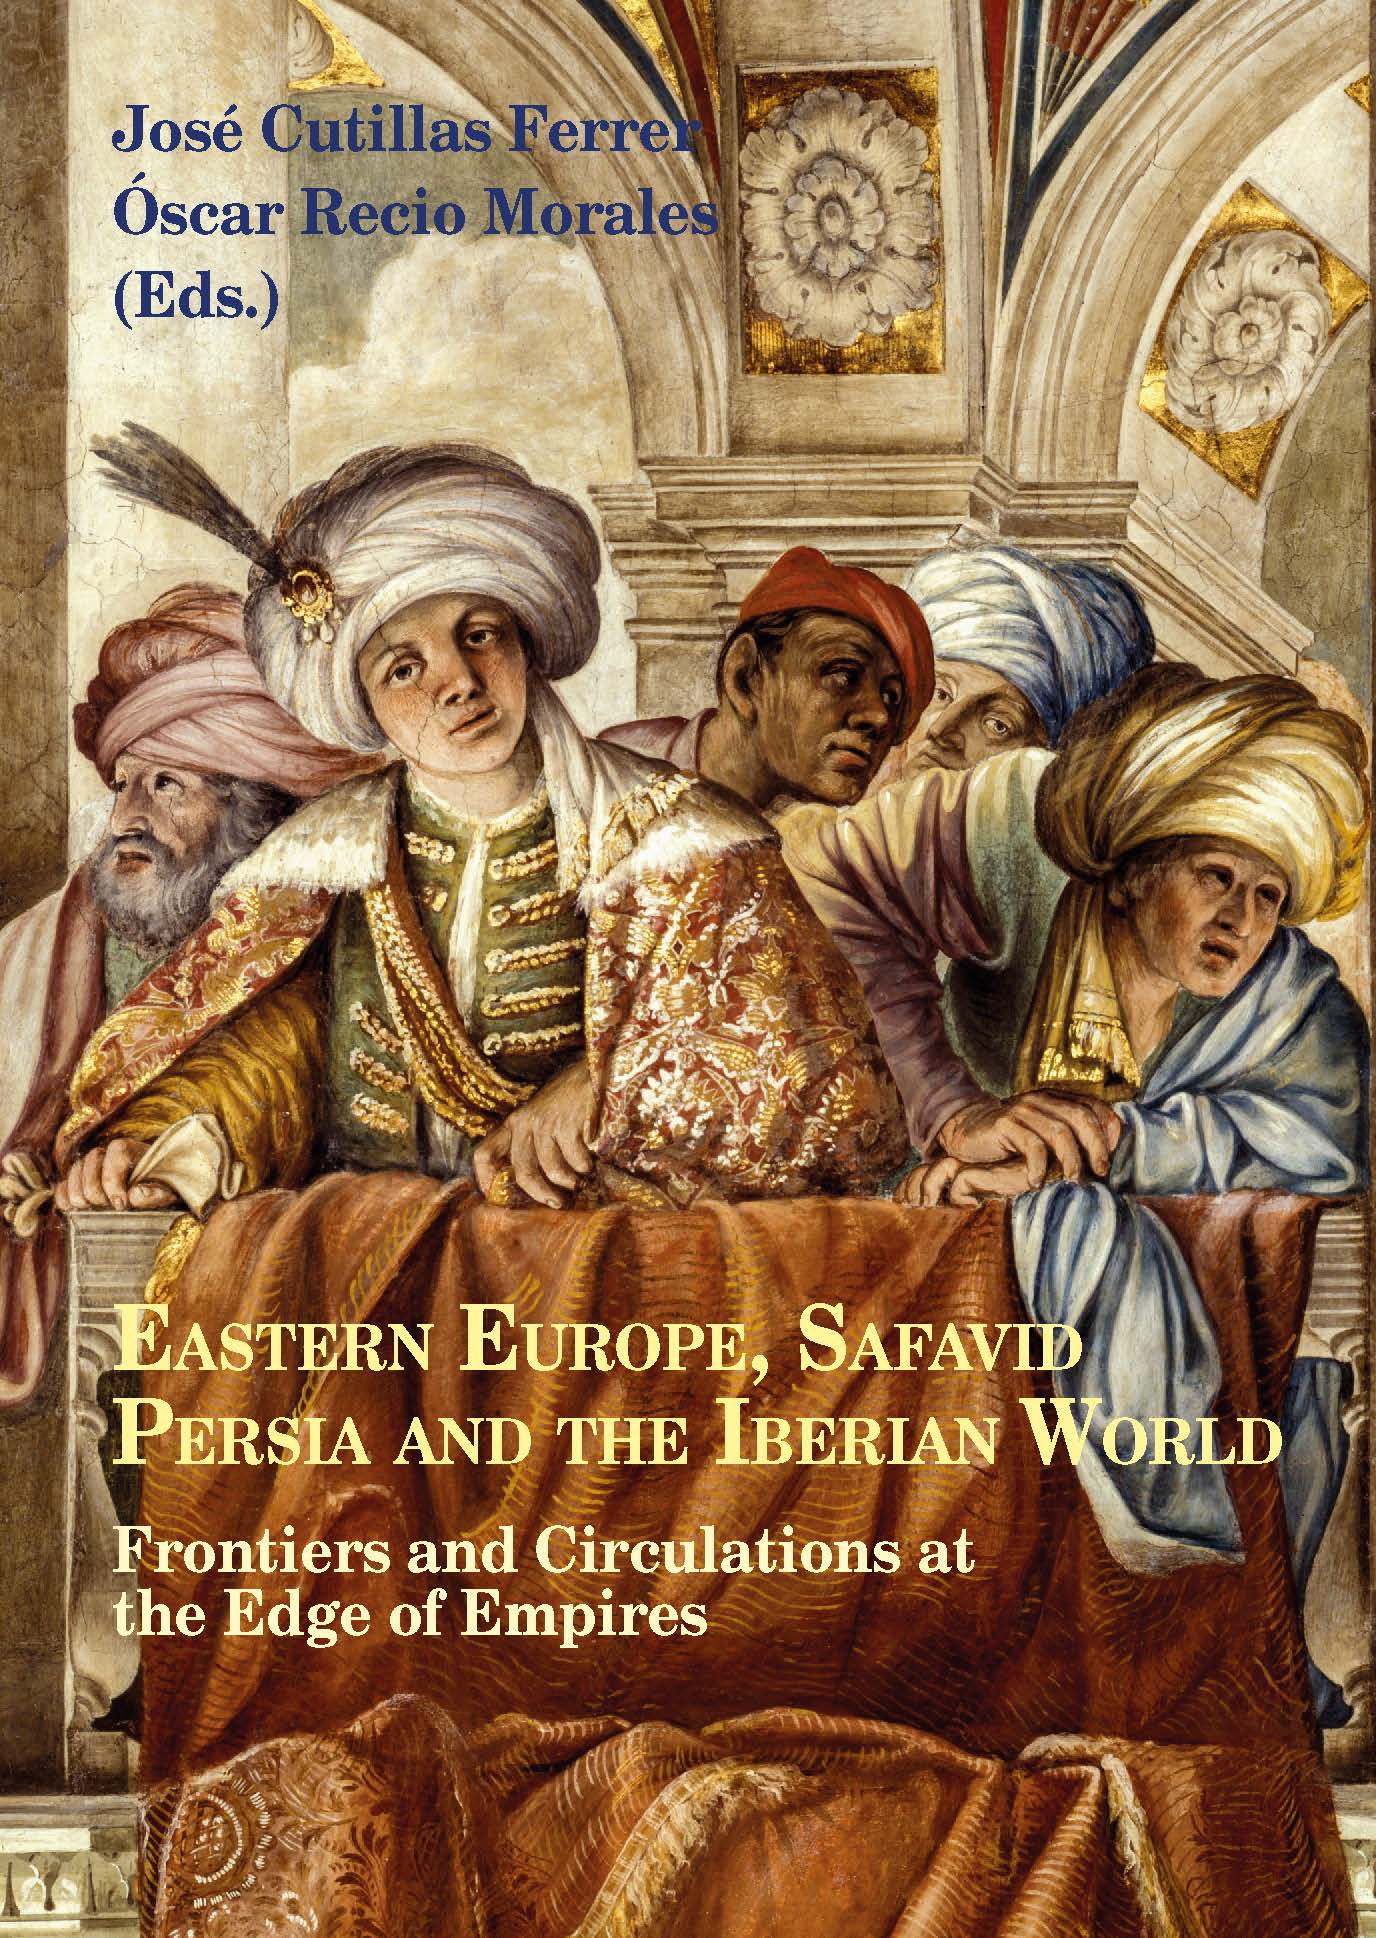 Imagen de portada del libro Eastern Europe, Safavid Persia and the Iberian world